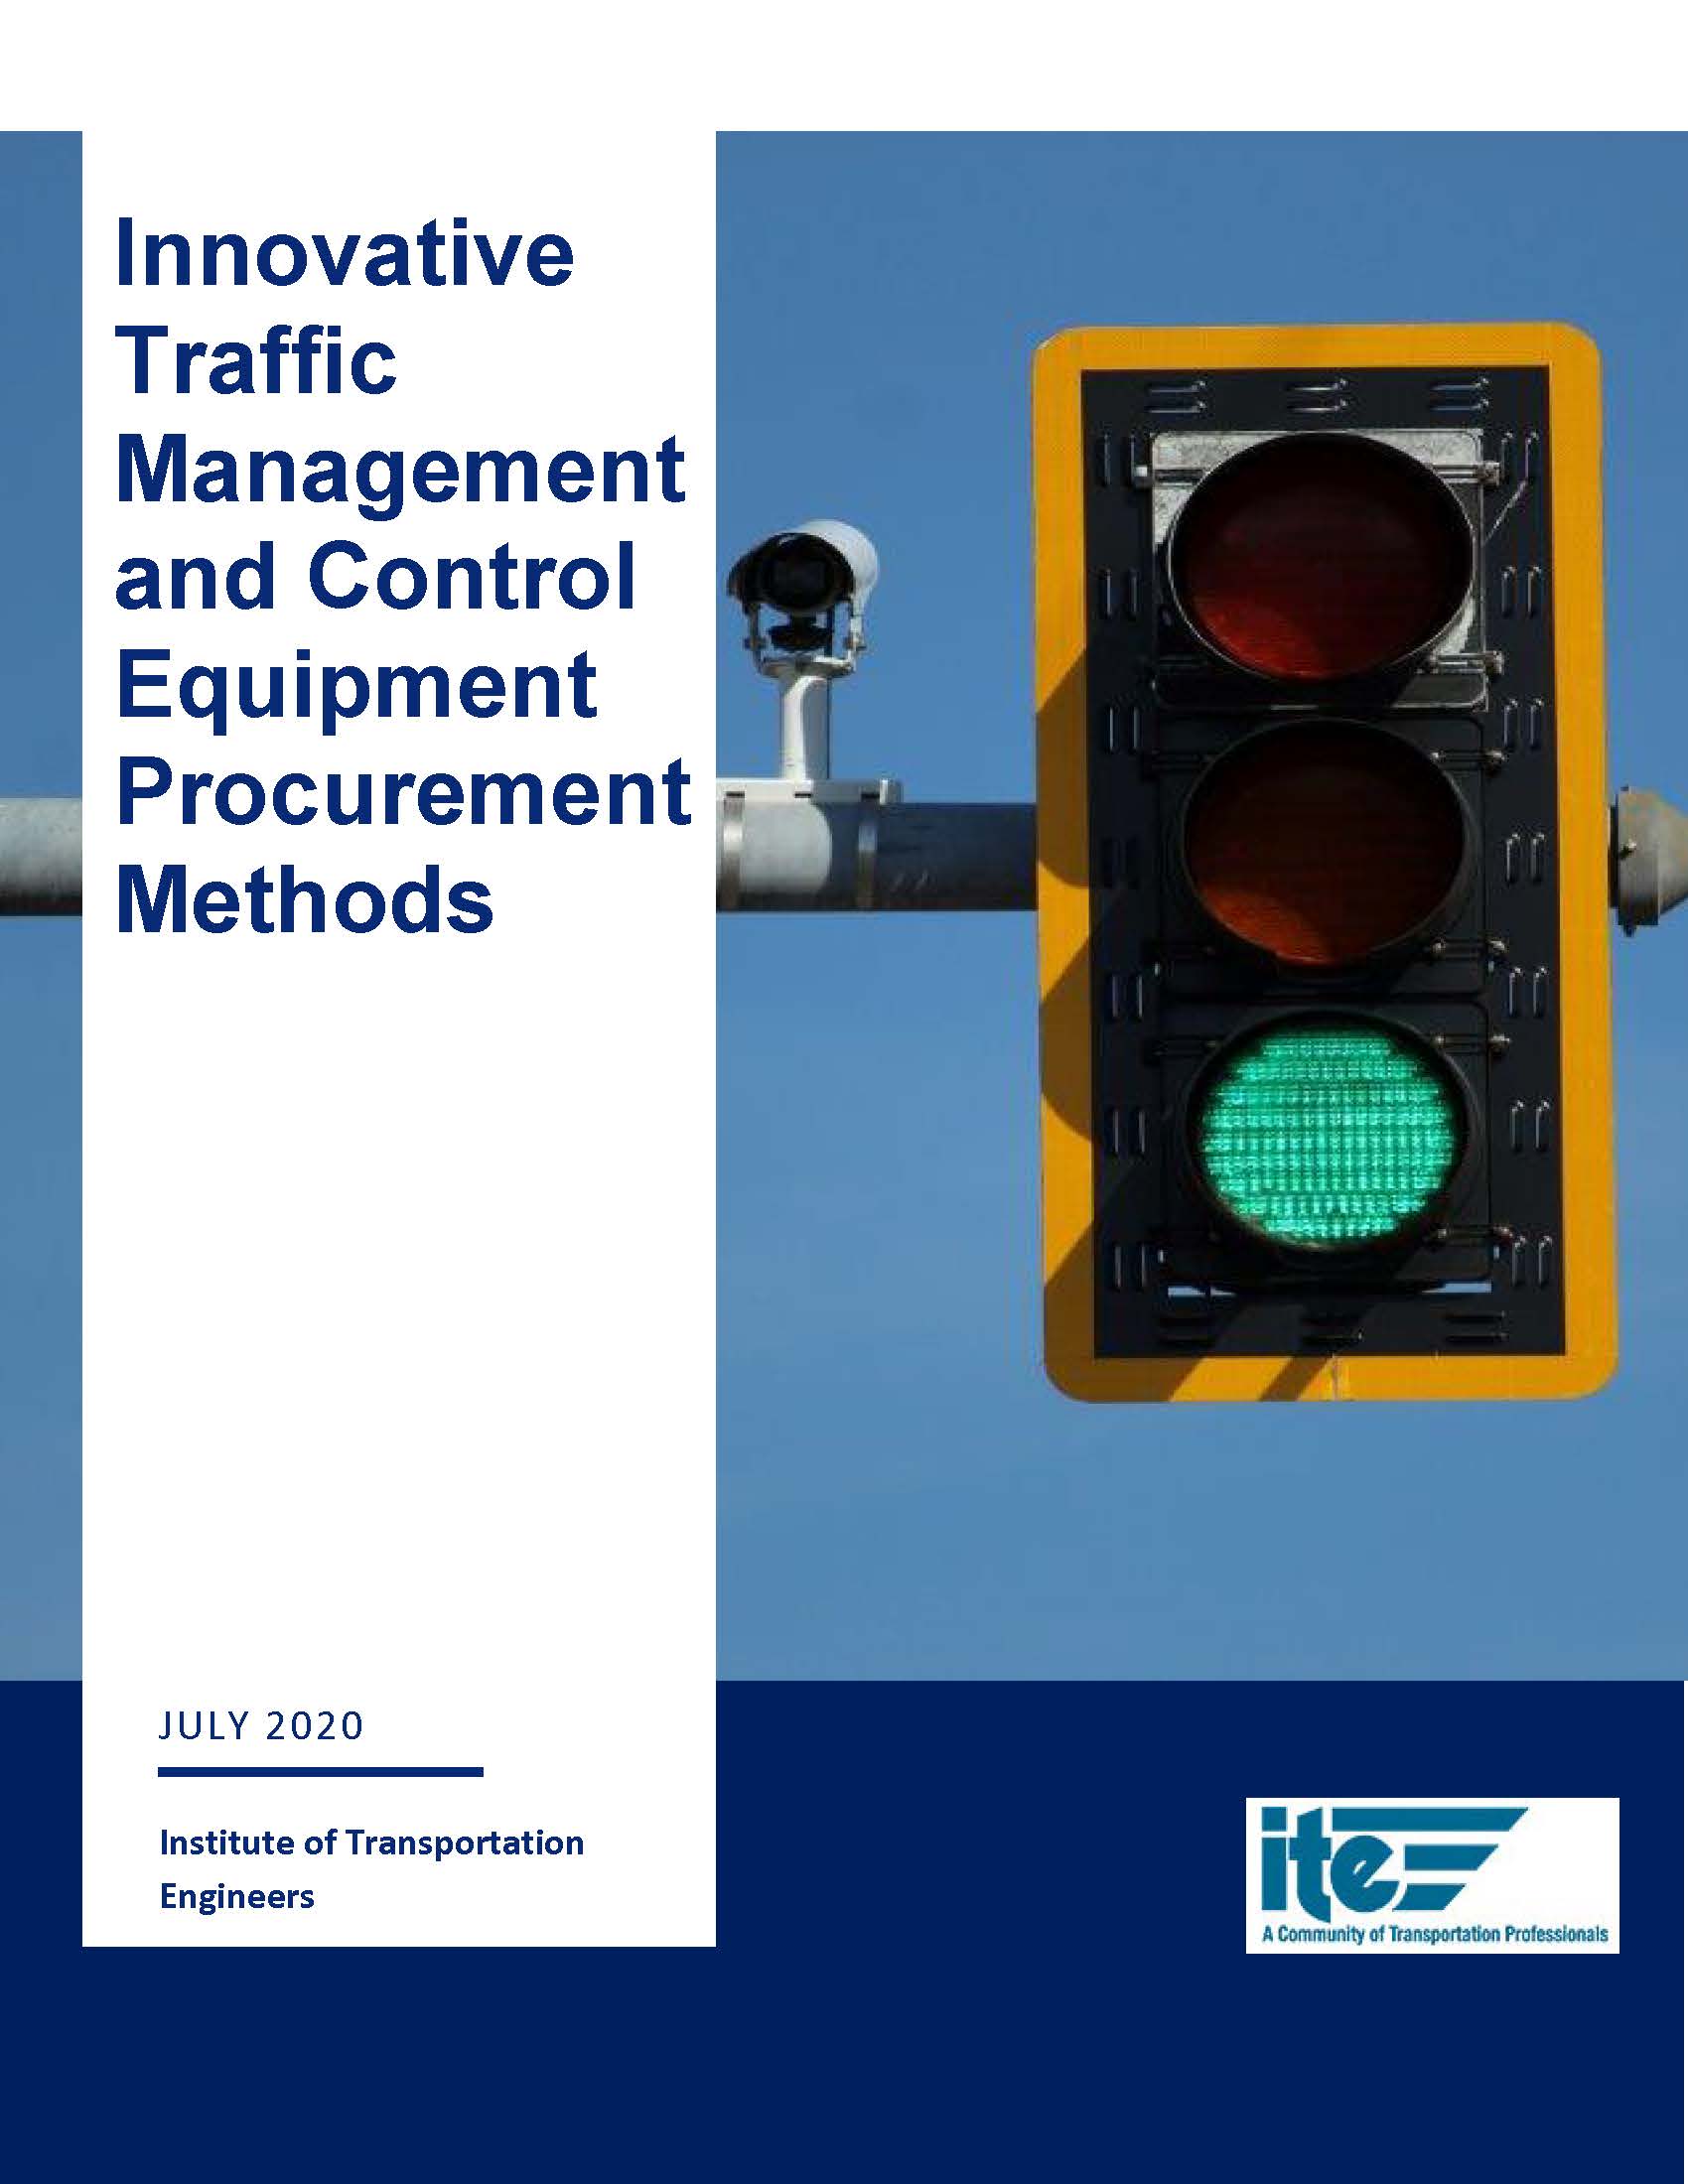 Innovative Traffic Mngmt & Control Equipment Procurement